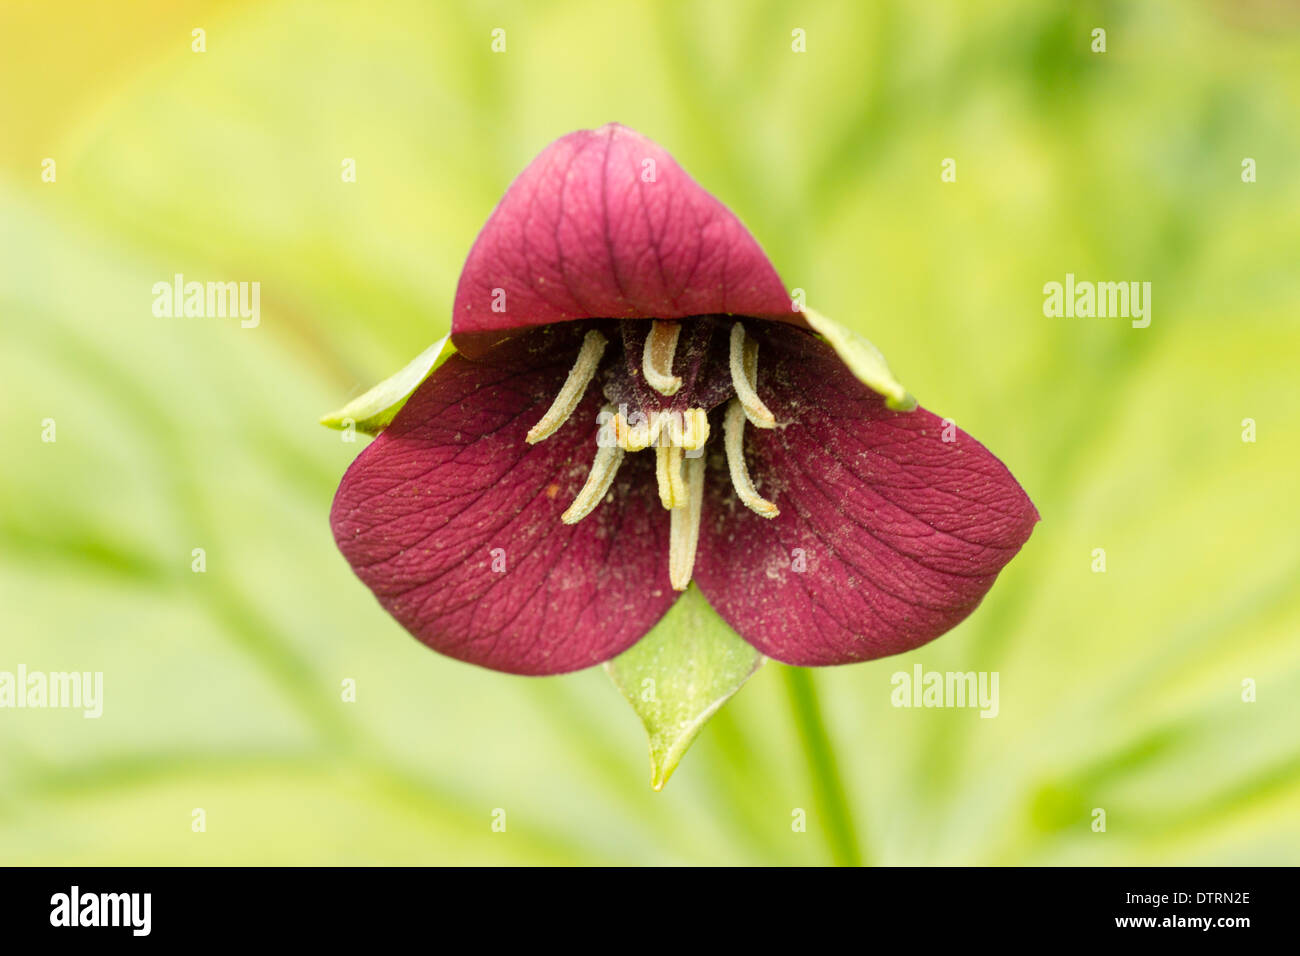 Isolated flower of Red Trillium, Trillium erectum, against a diffused green background Stock Photo